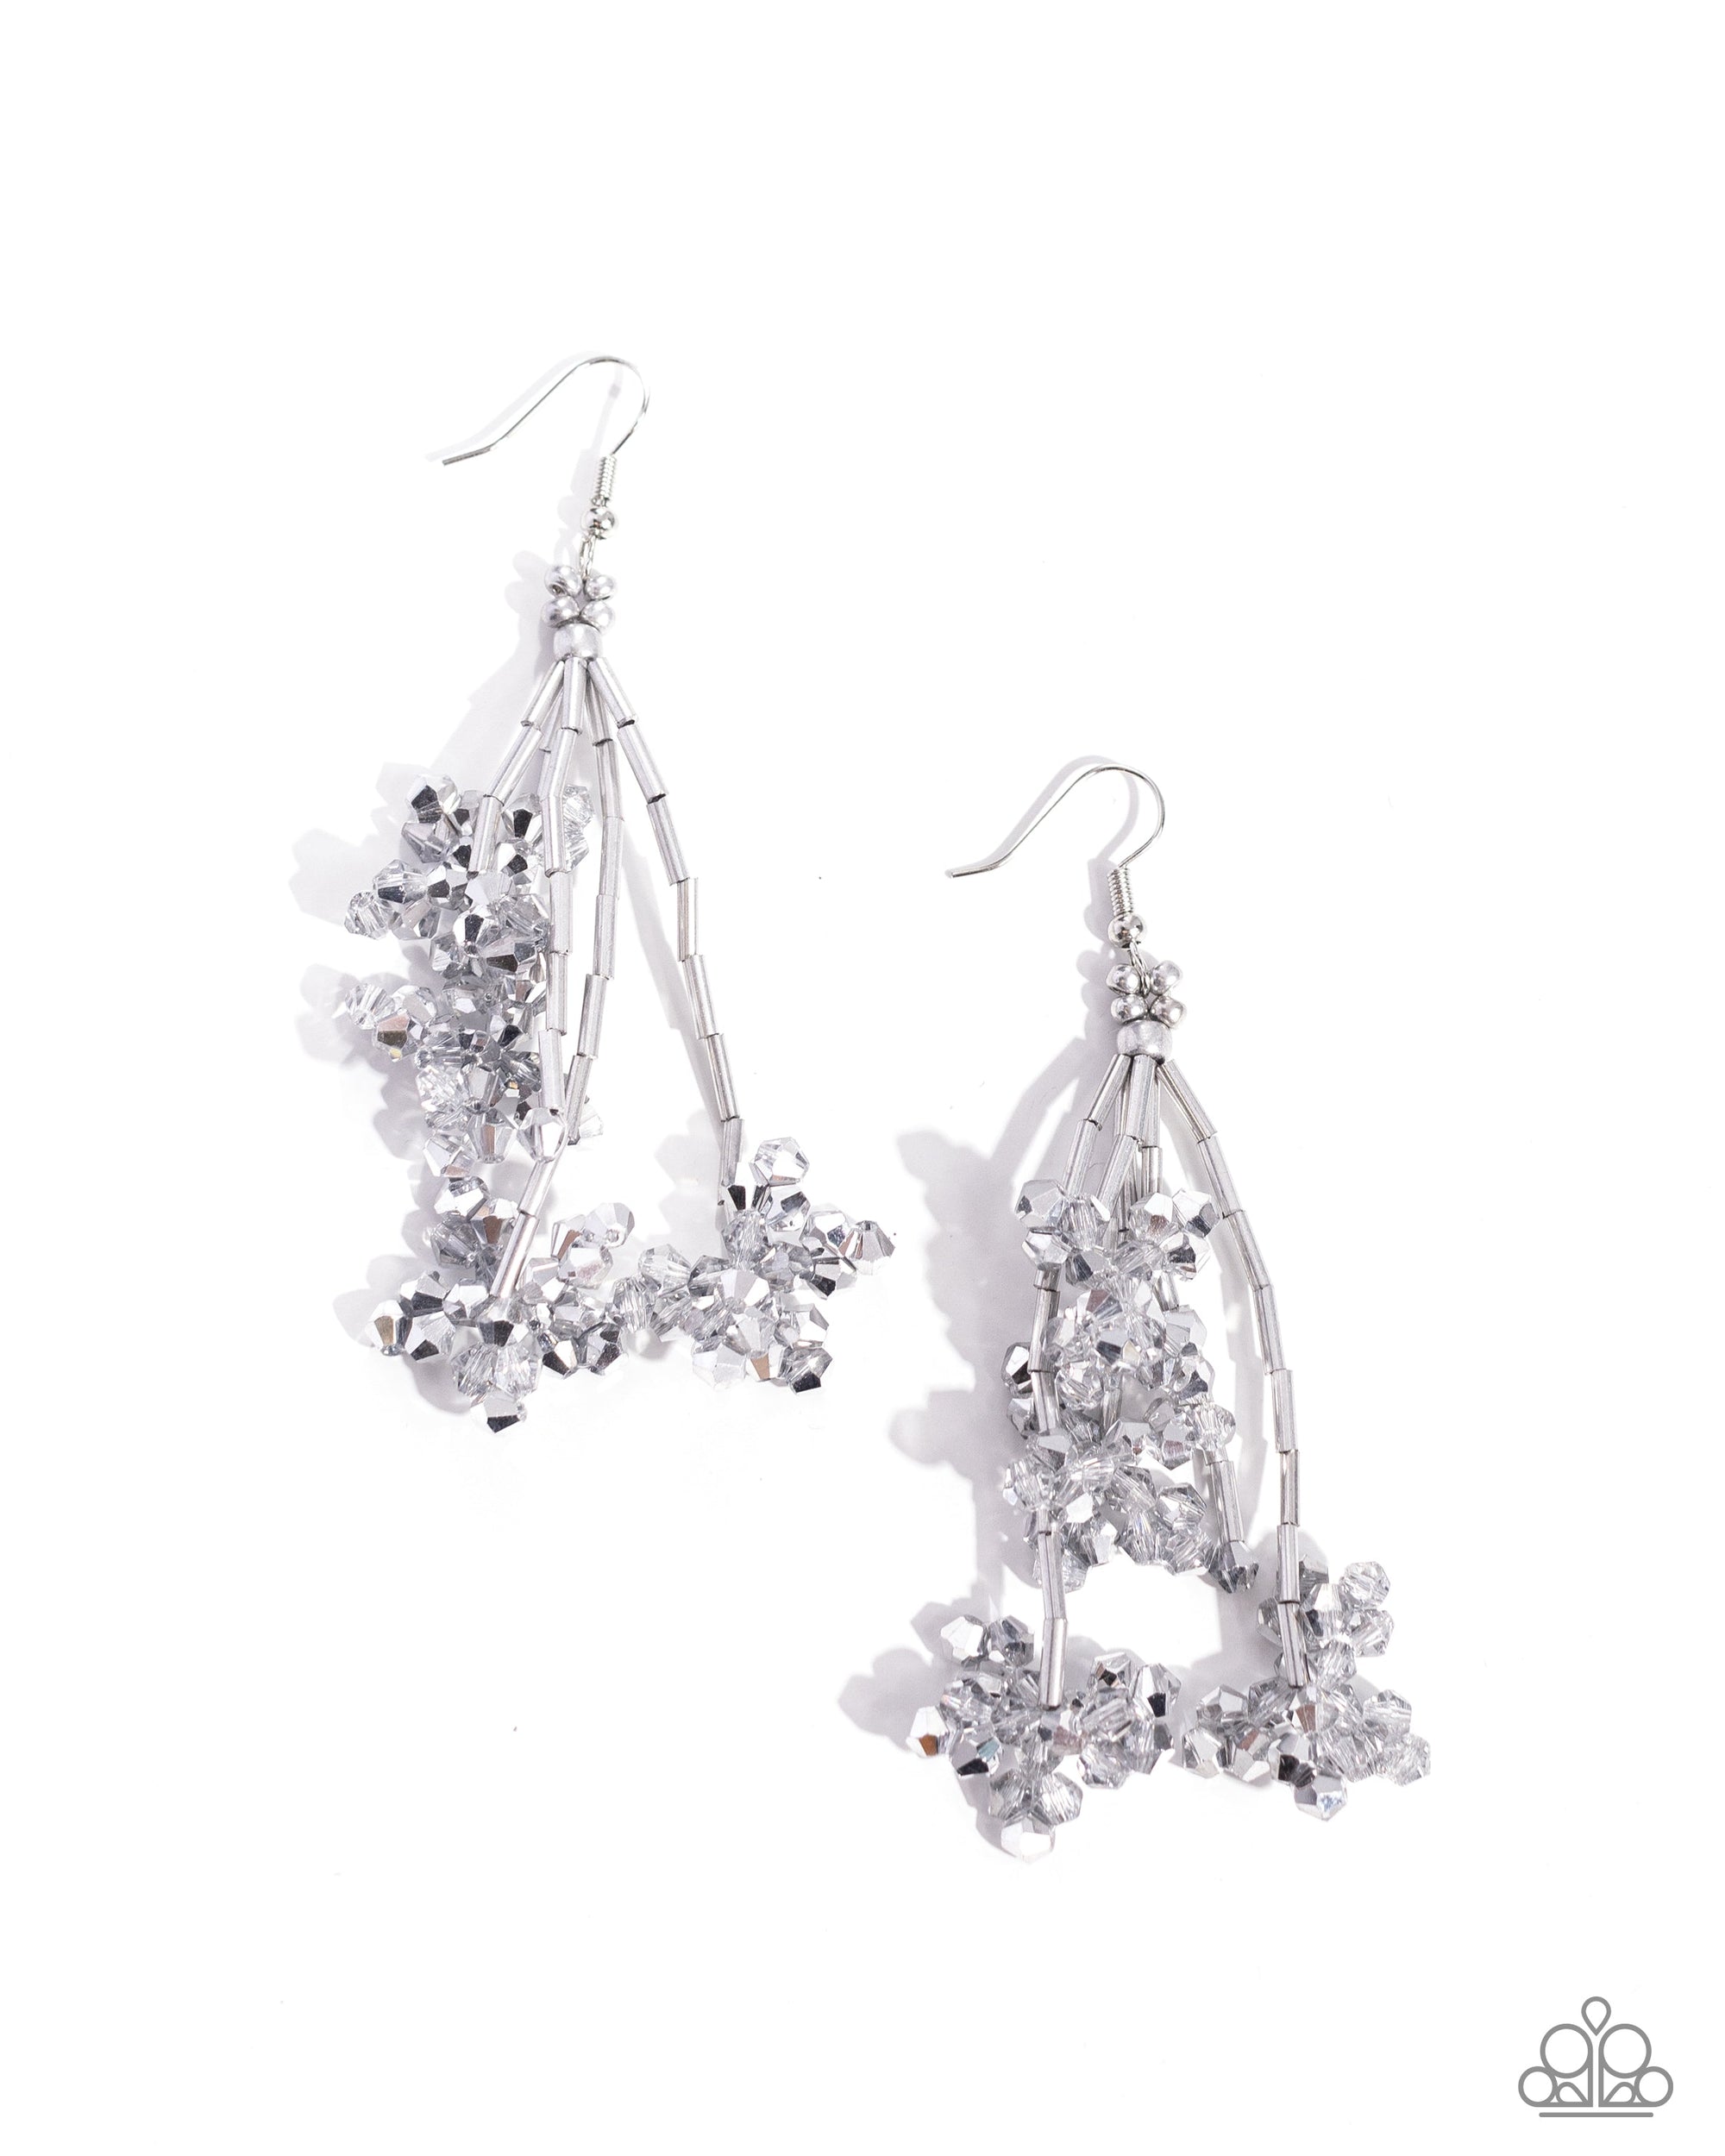 Petaled Precipitation Silver & Hematite Earrings - Paparazzi Accessories- lightbox - CarasShop.com - $5 Jewelry by Cara Jewels